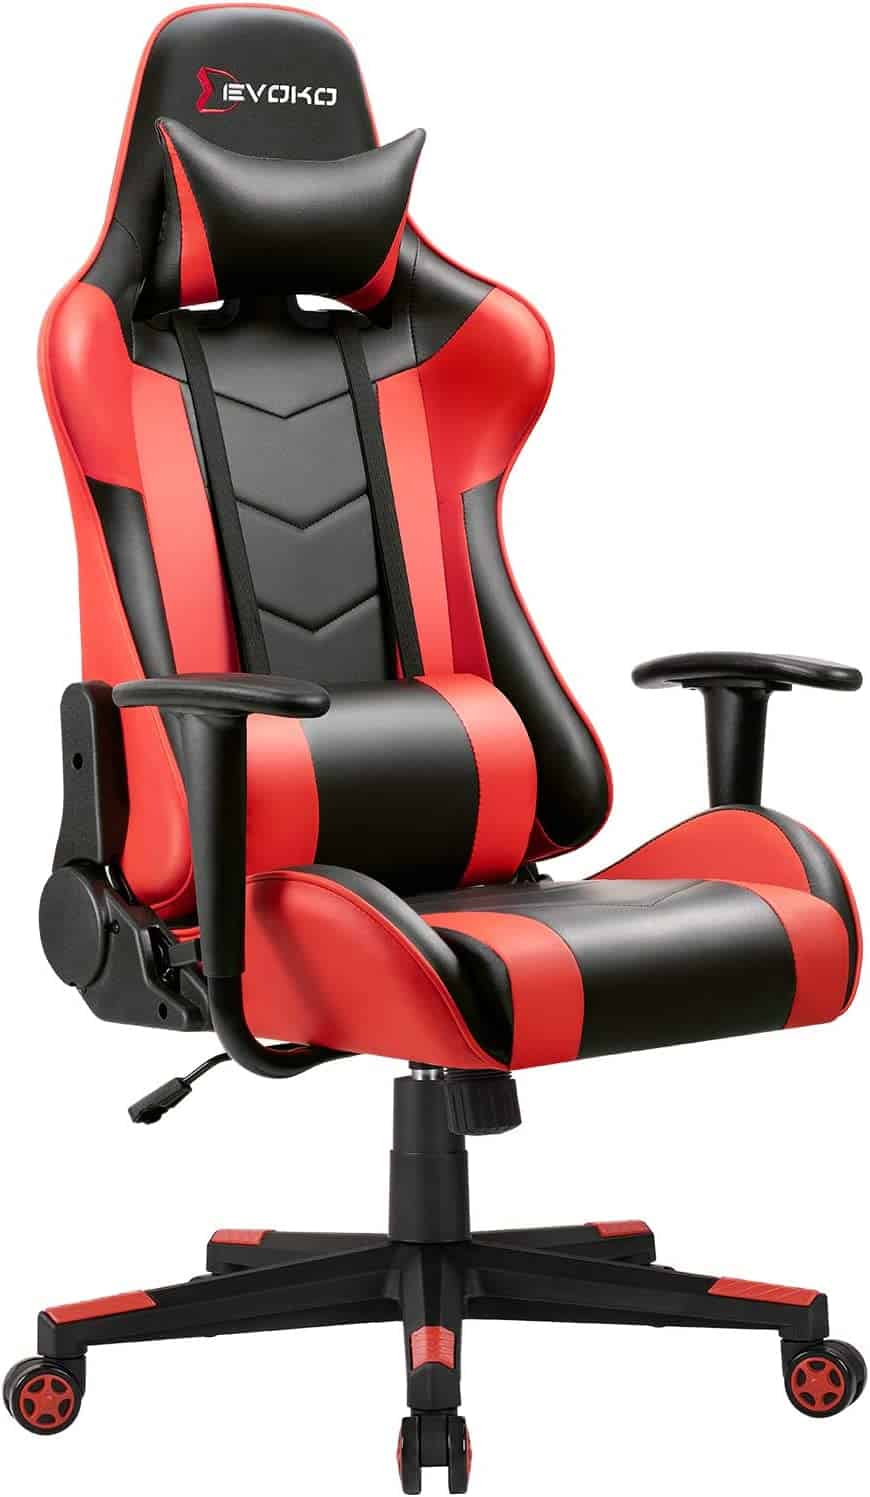 Devoko Ergonomic Racing Style Gaming Chair Red and Black